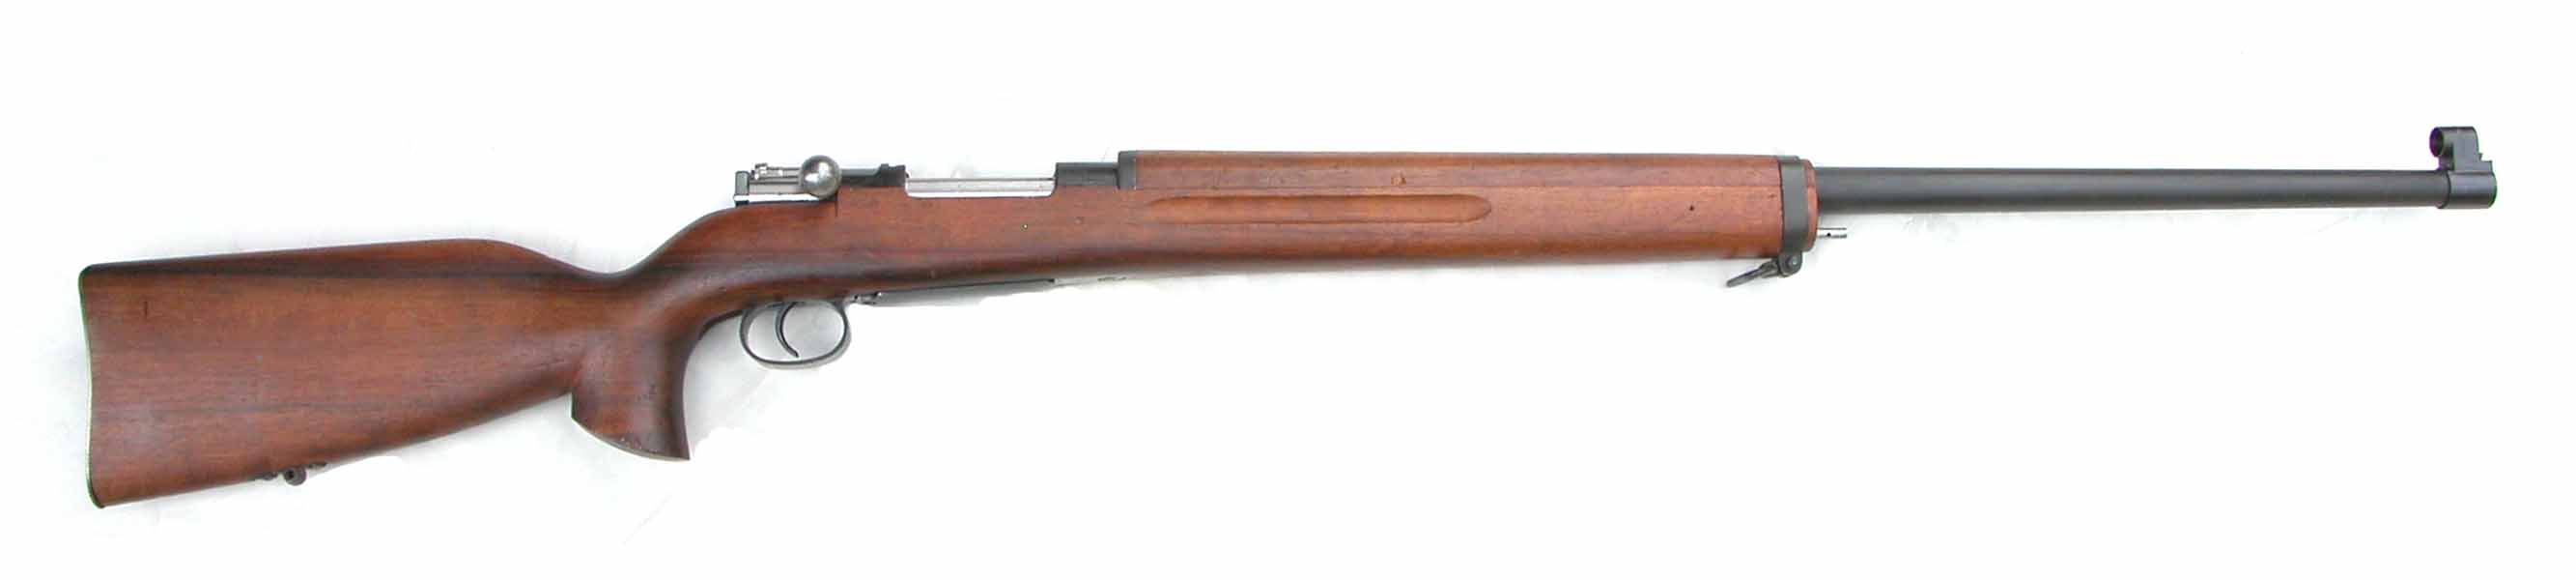 ./guns/rifle/bilder/Rifle-Kongsberg-Mauser-M38-9-1.jpg